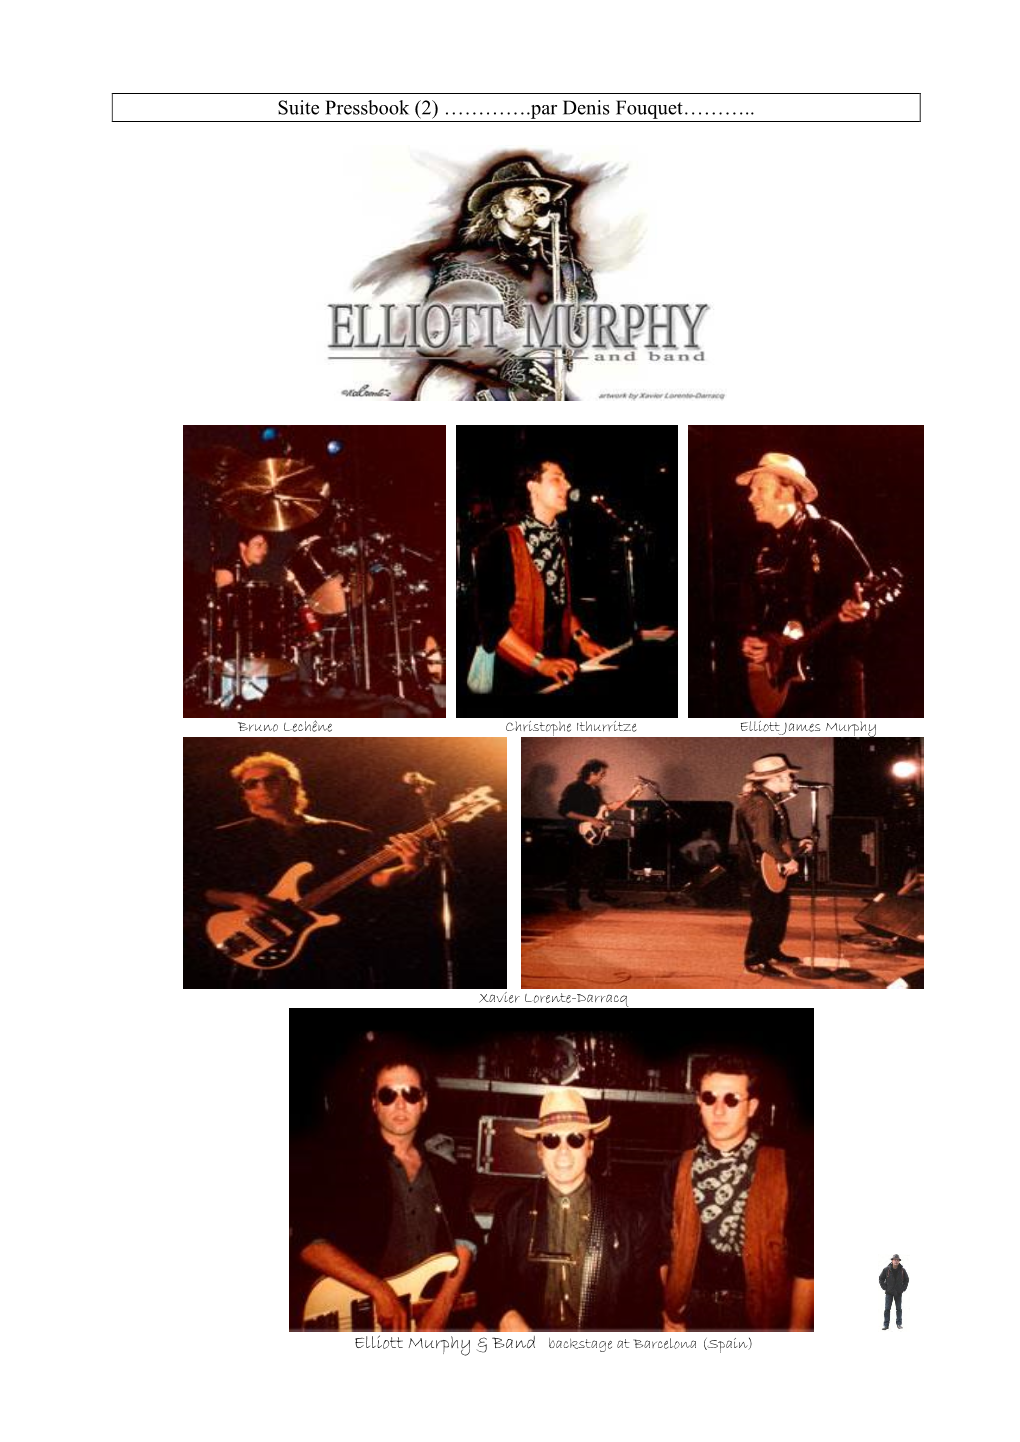 Elliott Murphy & Band Backstage at Barcelona (Spain)